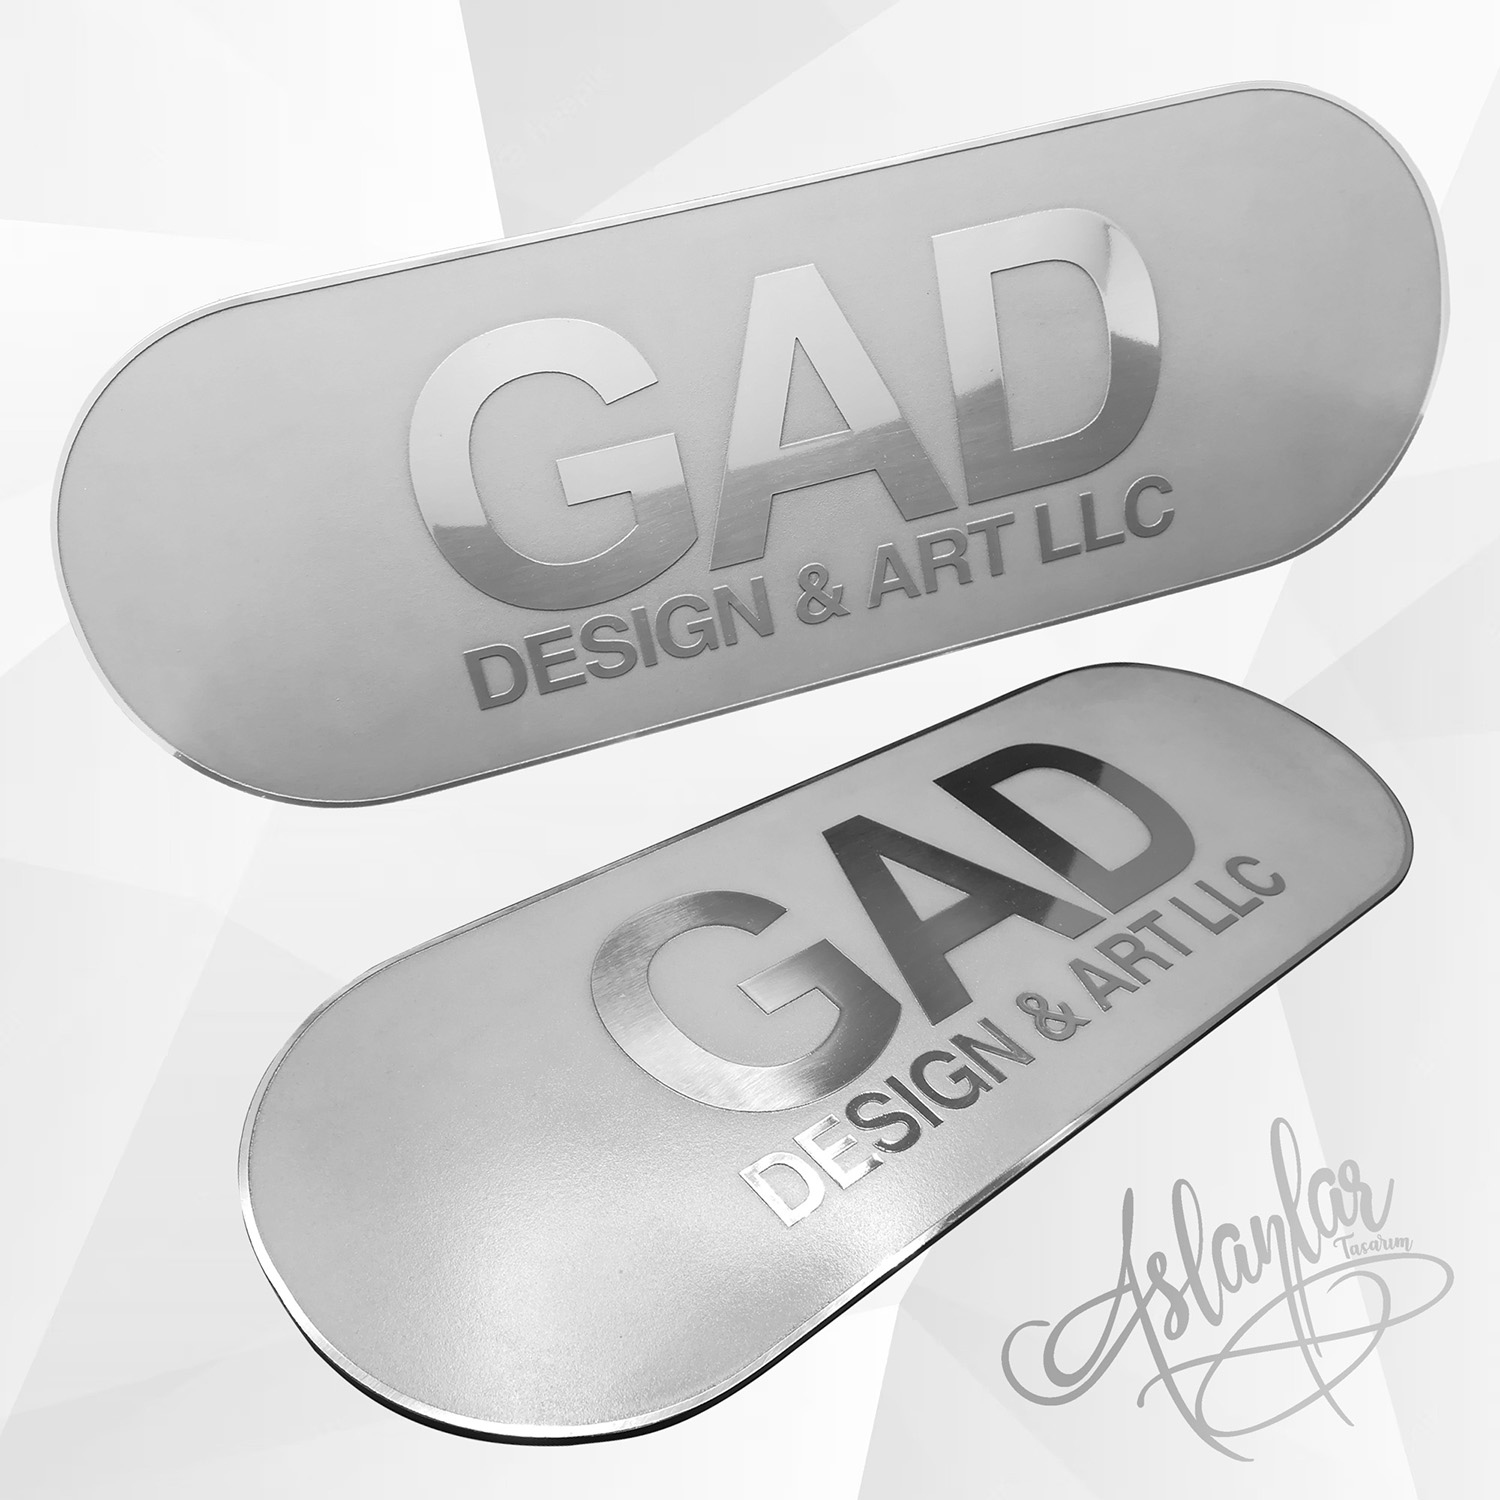 GAD Design & Art LLC Tabela